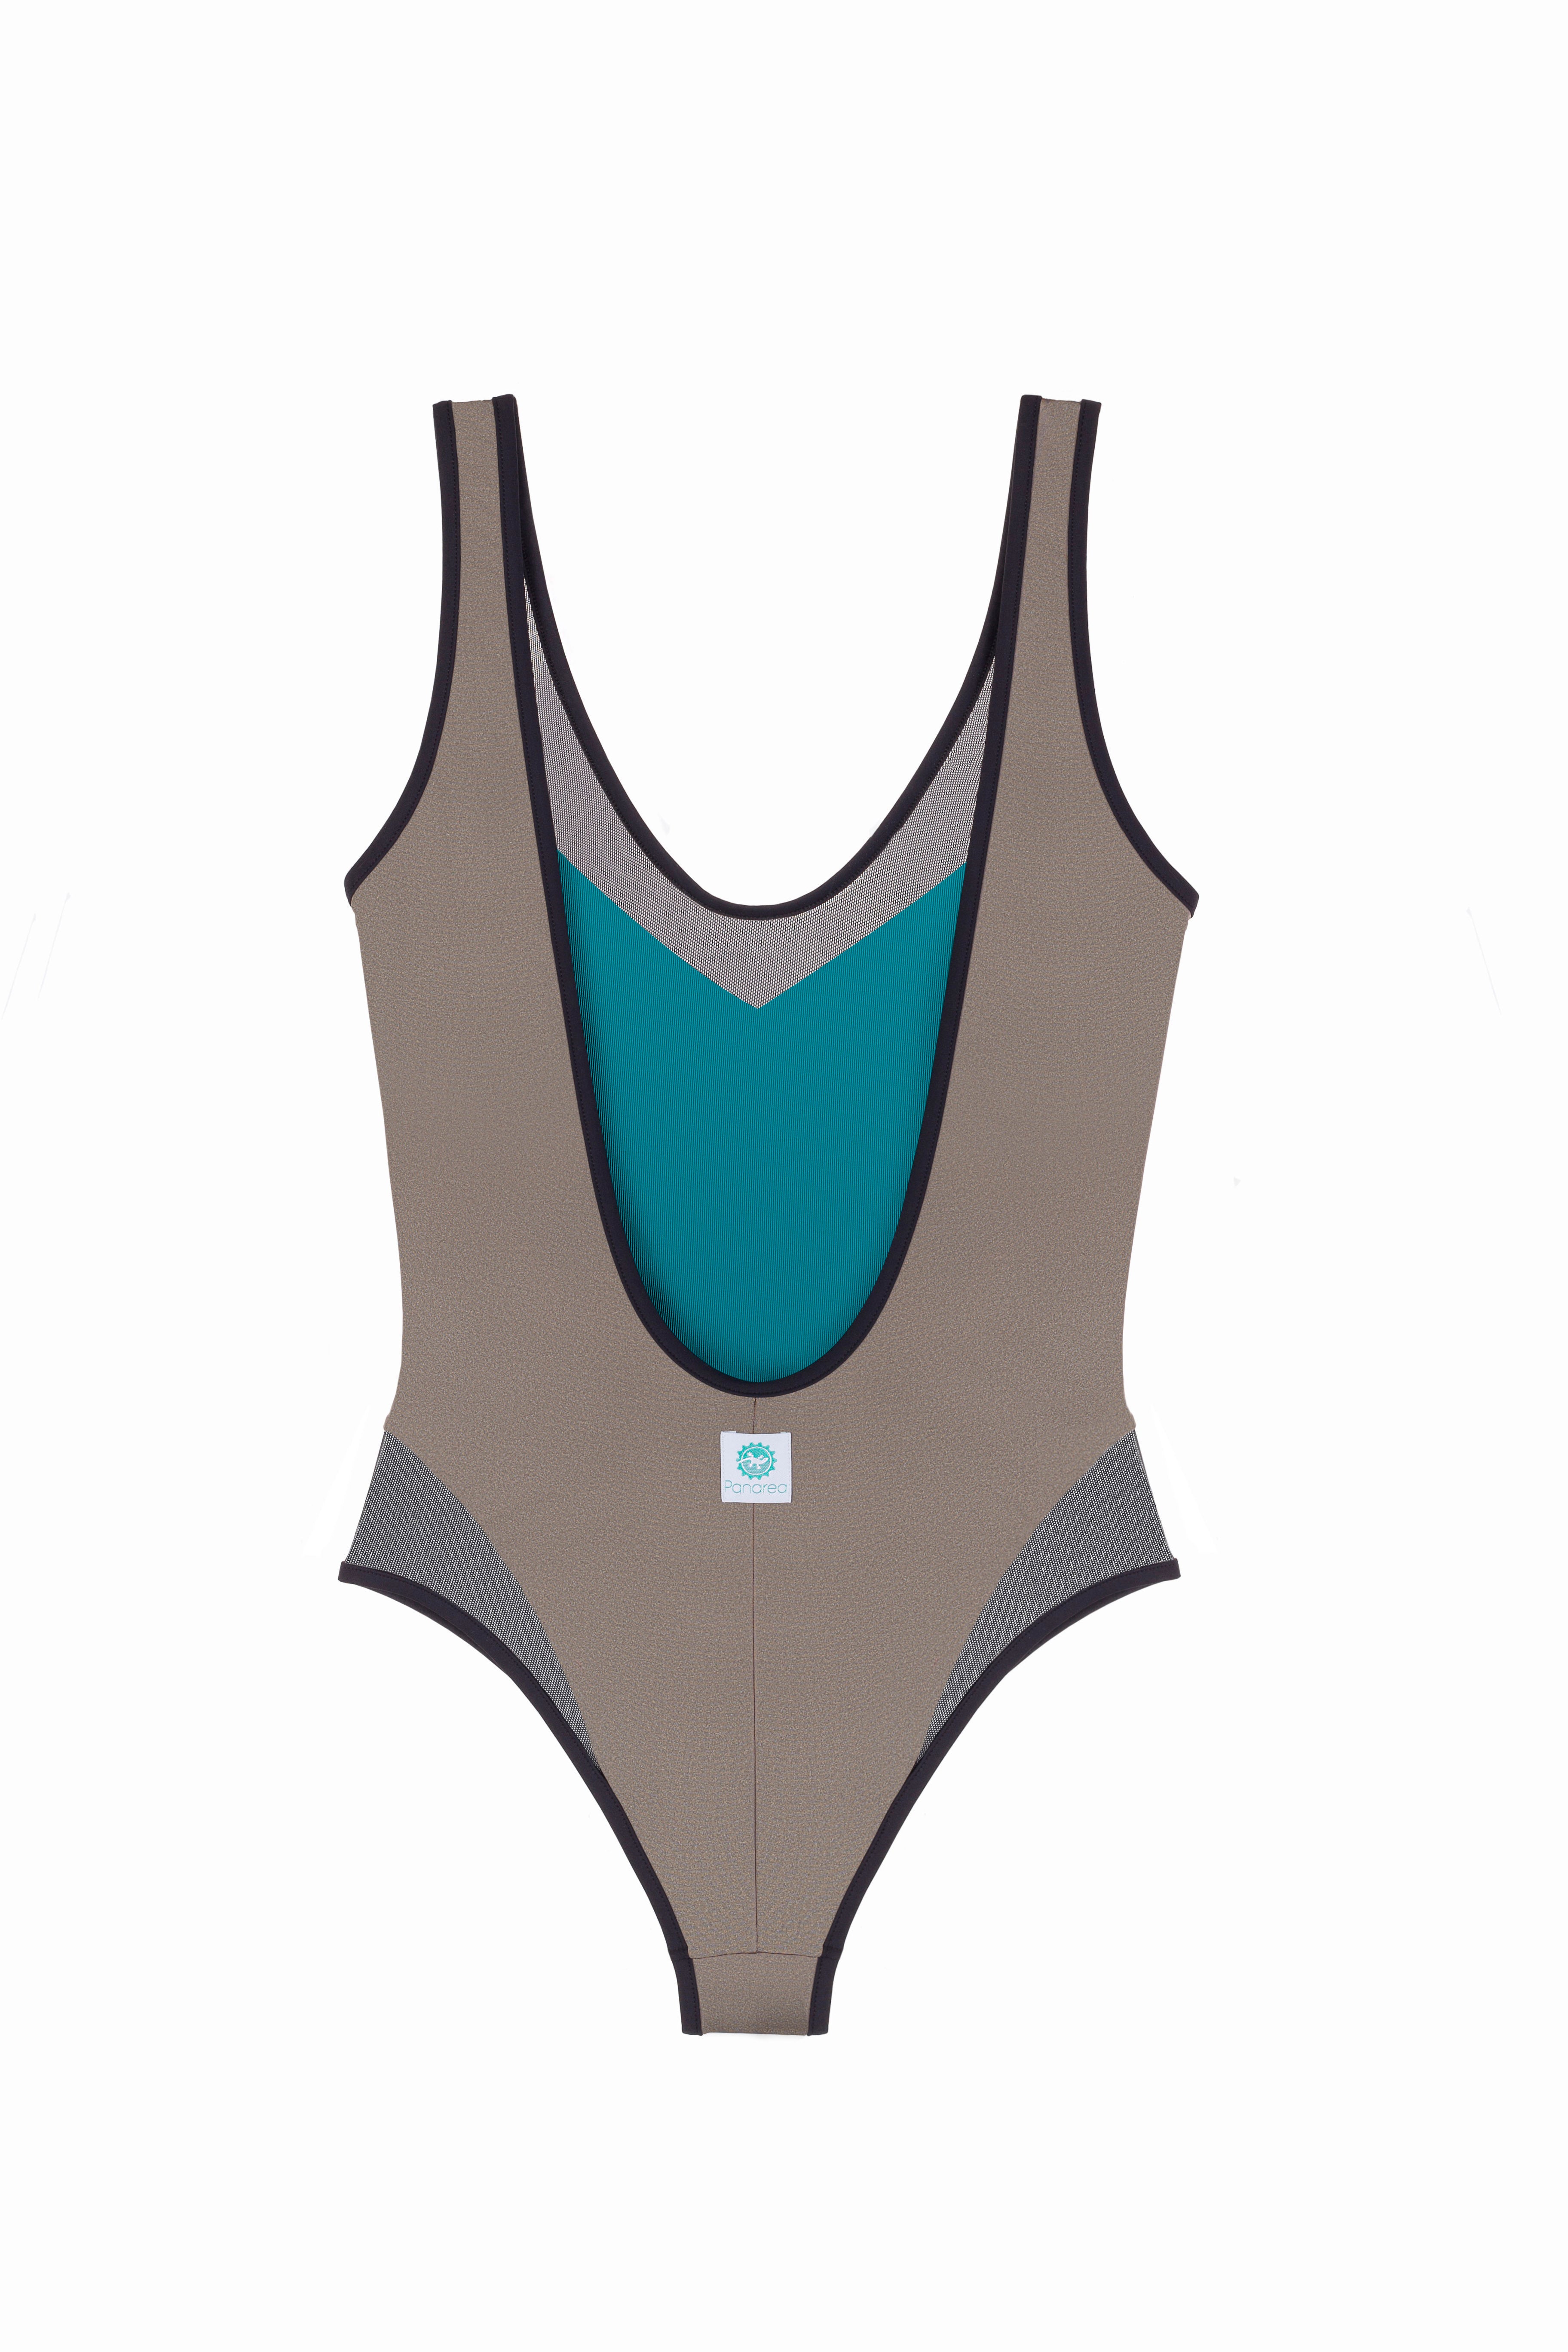 MELODI One- Piece swimsuit- Tortora